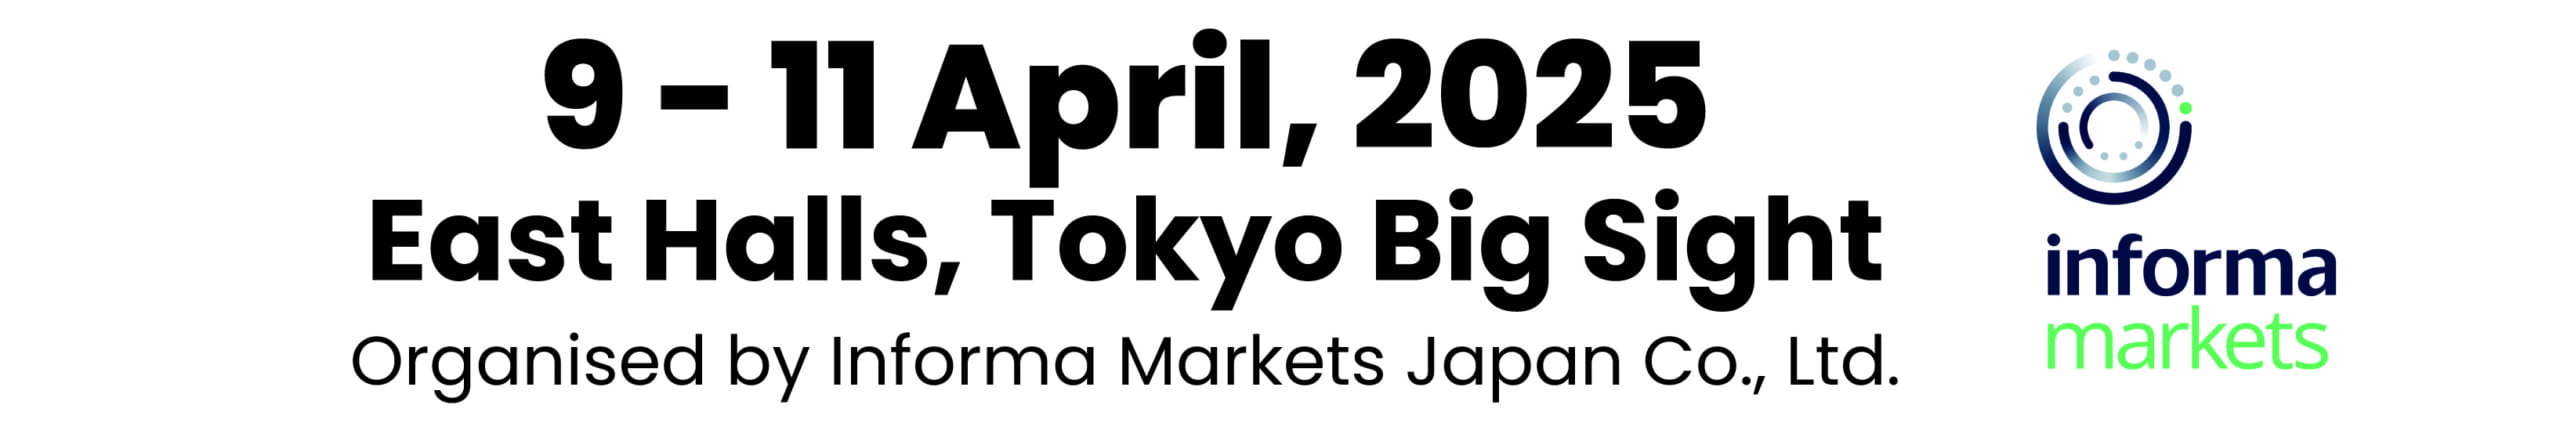 JAPAN LIFE SCIENCE WEEK 2025 9-11 April 2025 Tokyo Big Sight, Tokyo, Japan